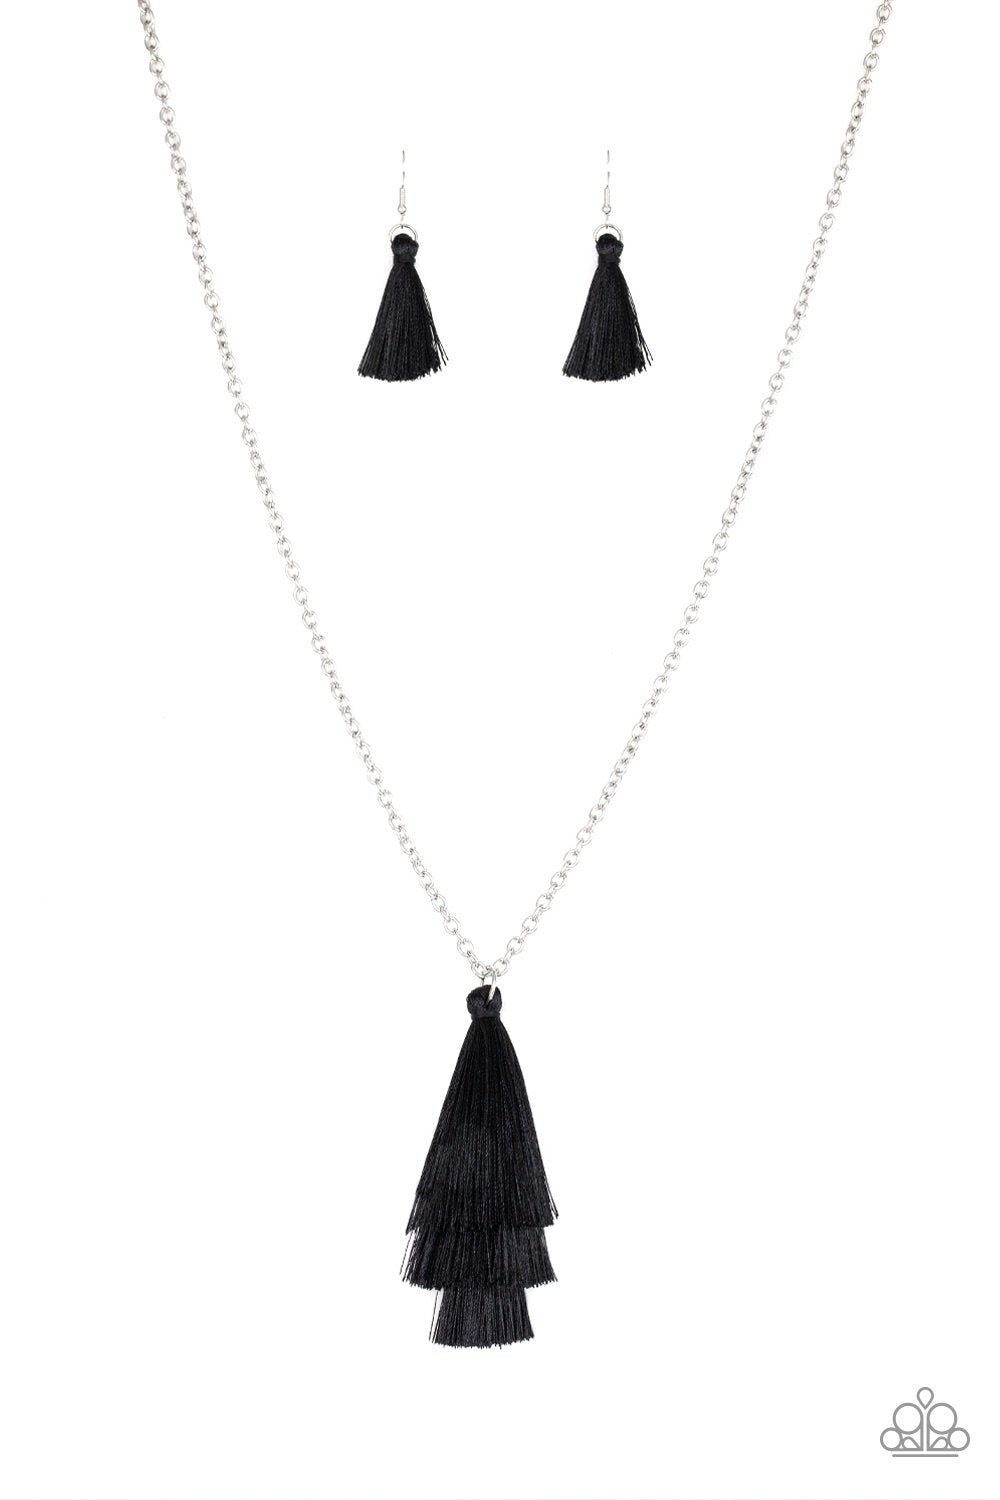 Triple The Tassel Black Necklace